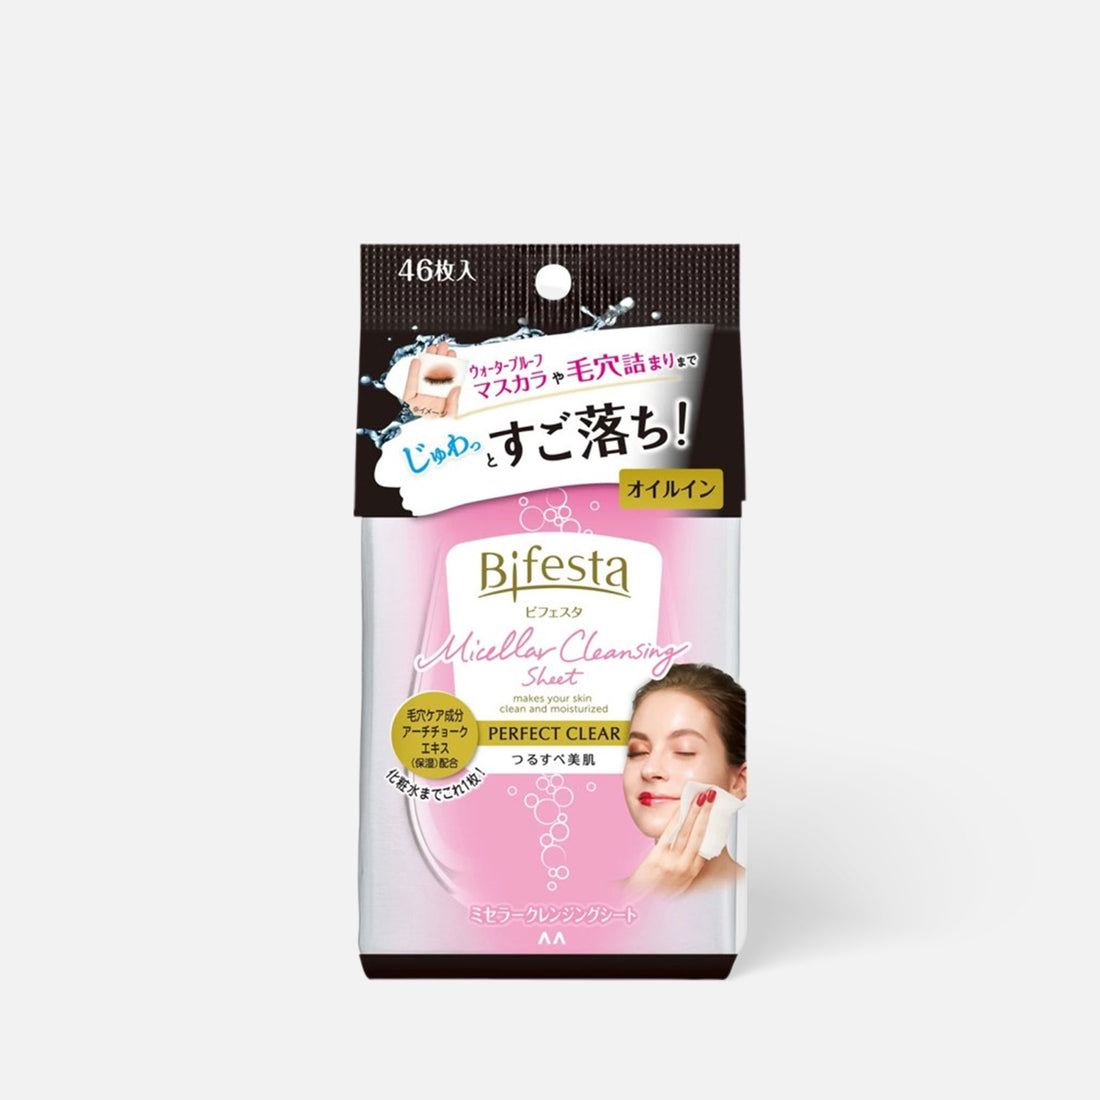 Bifesta 一次性卸妆巾 1包